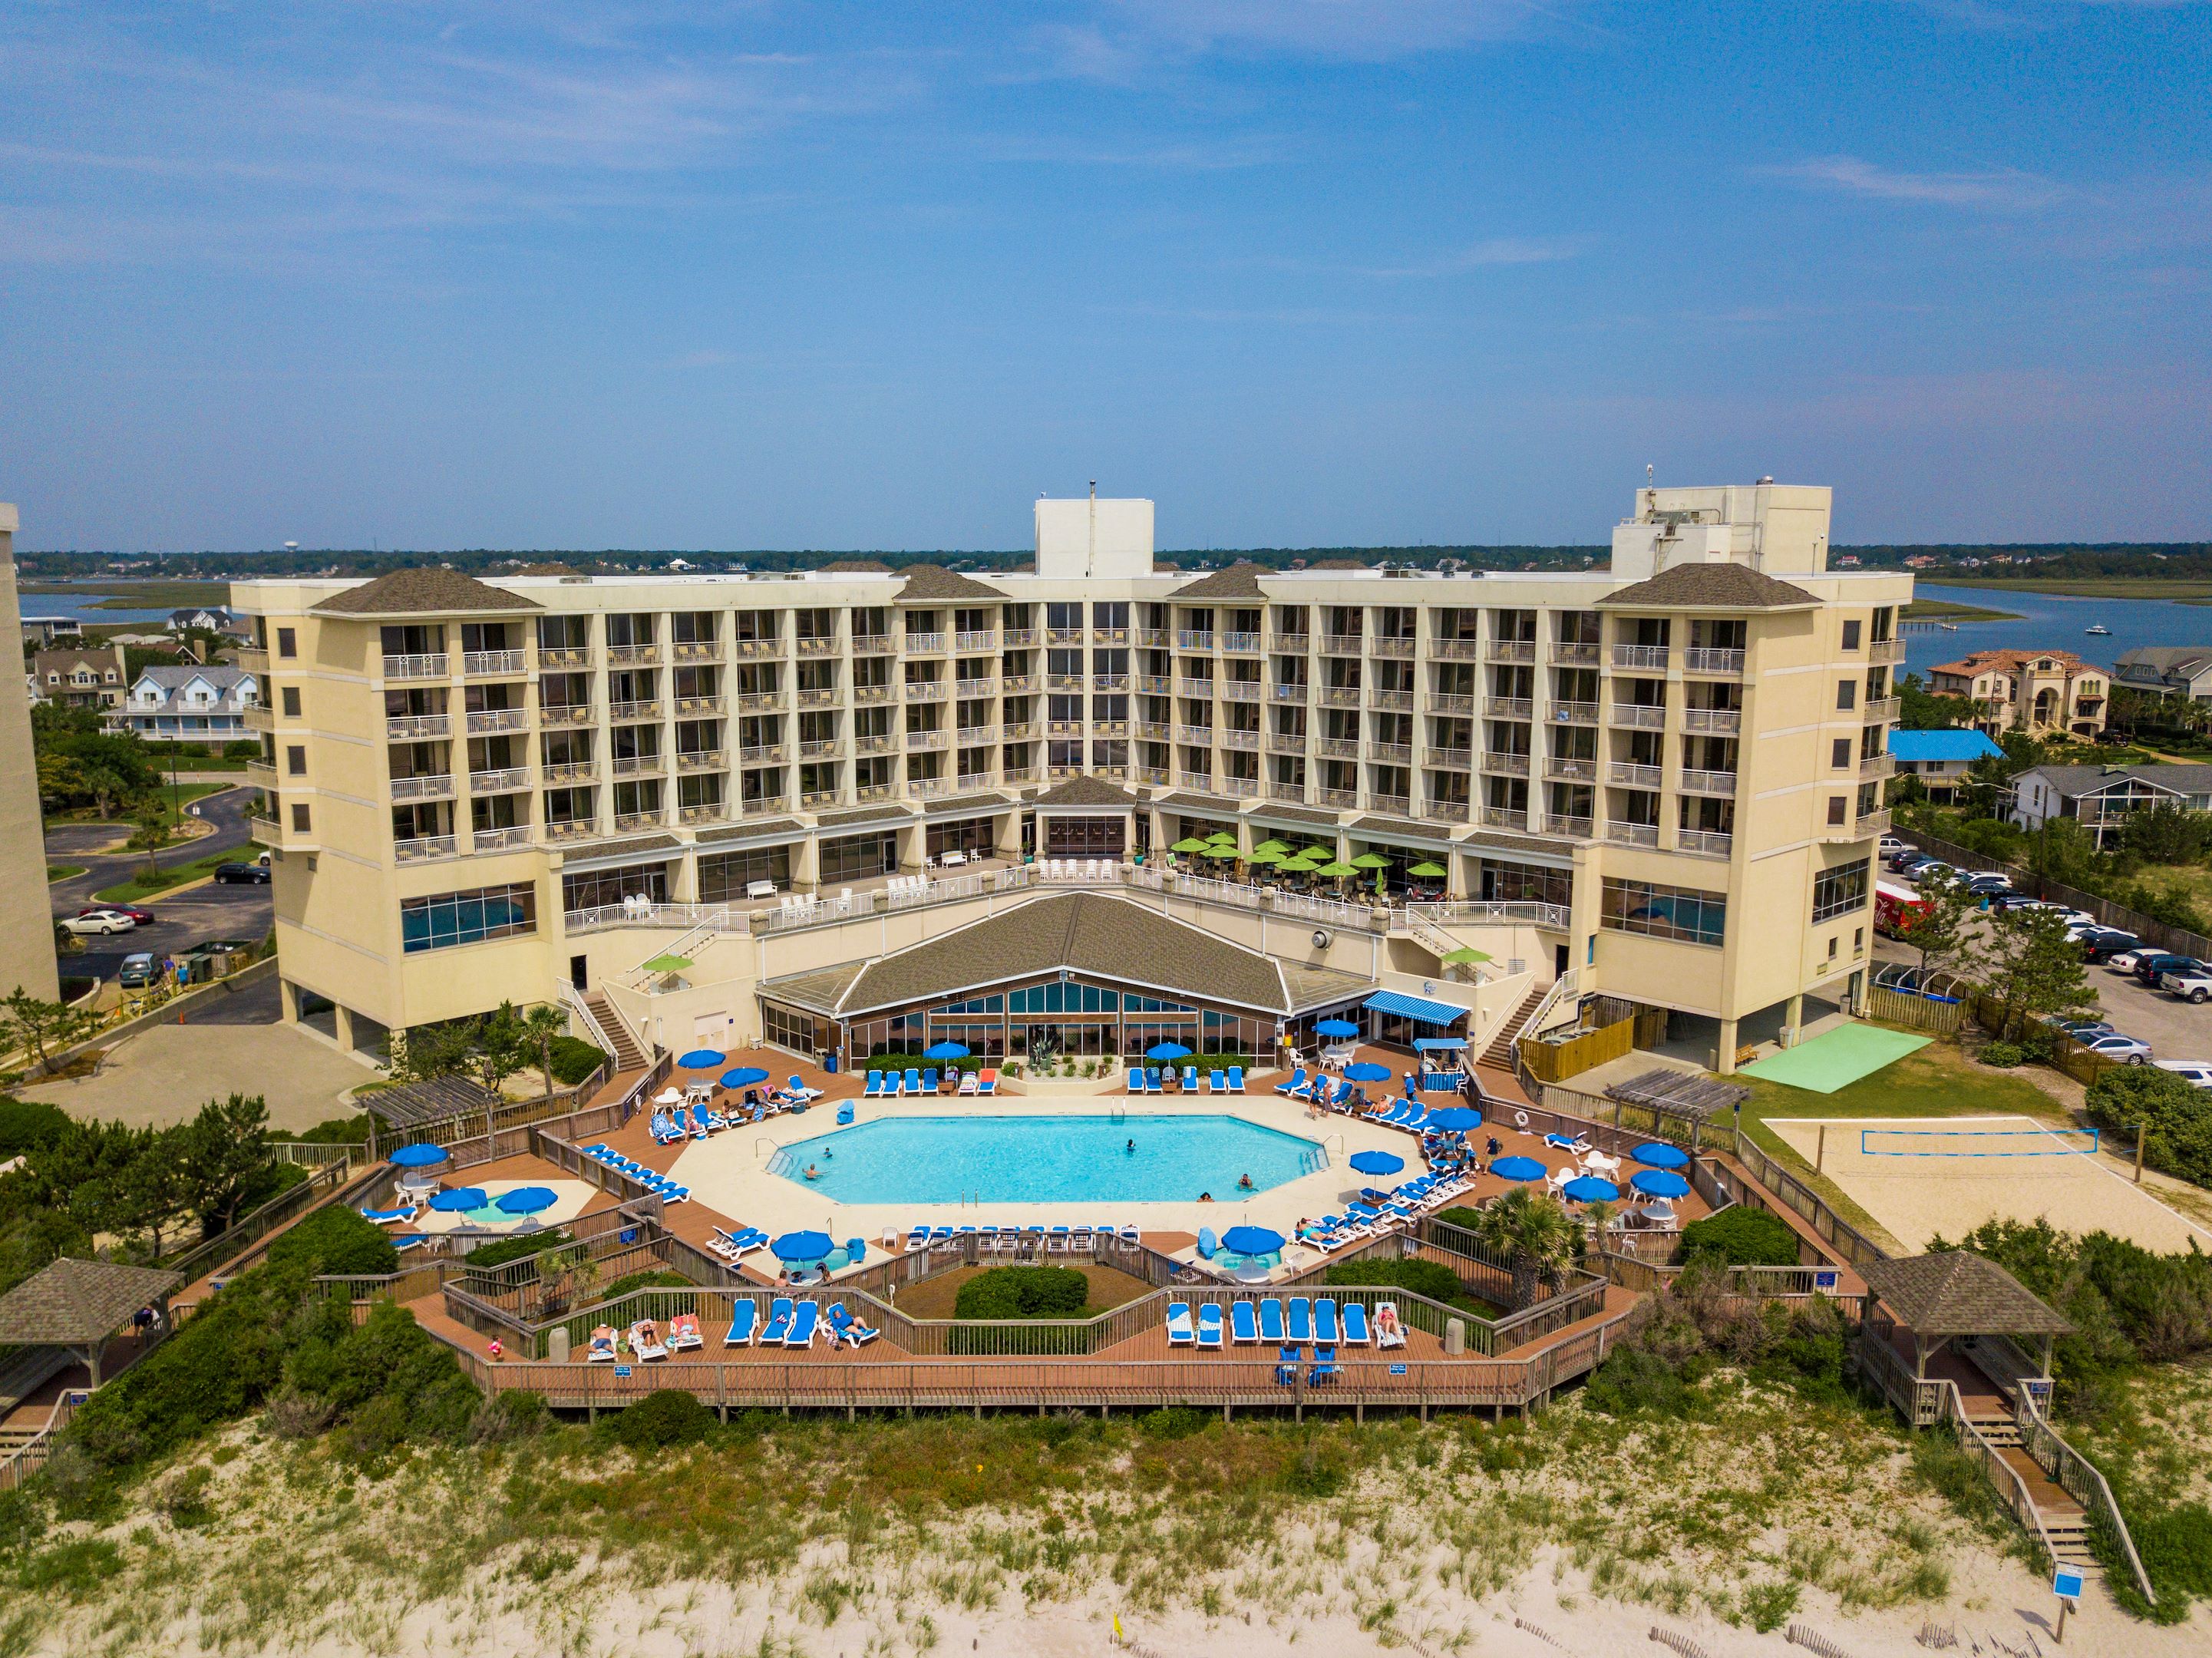 Holiday Inn Resort in Wrightsville Beach